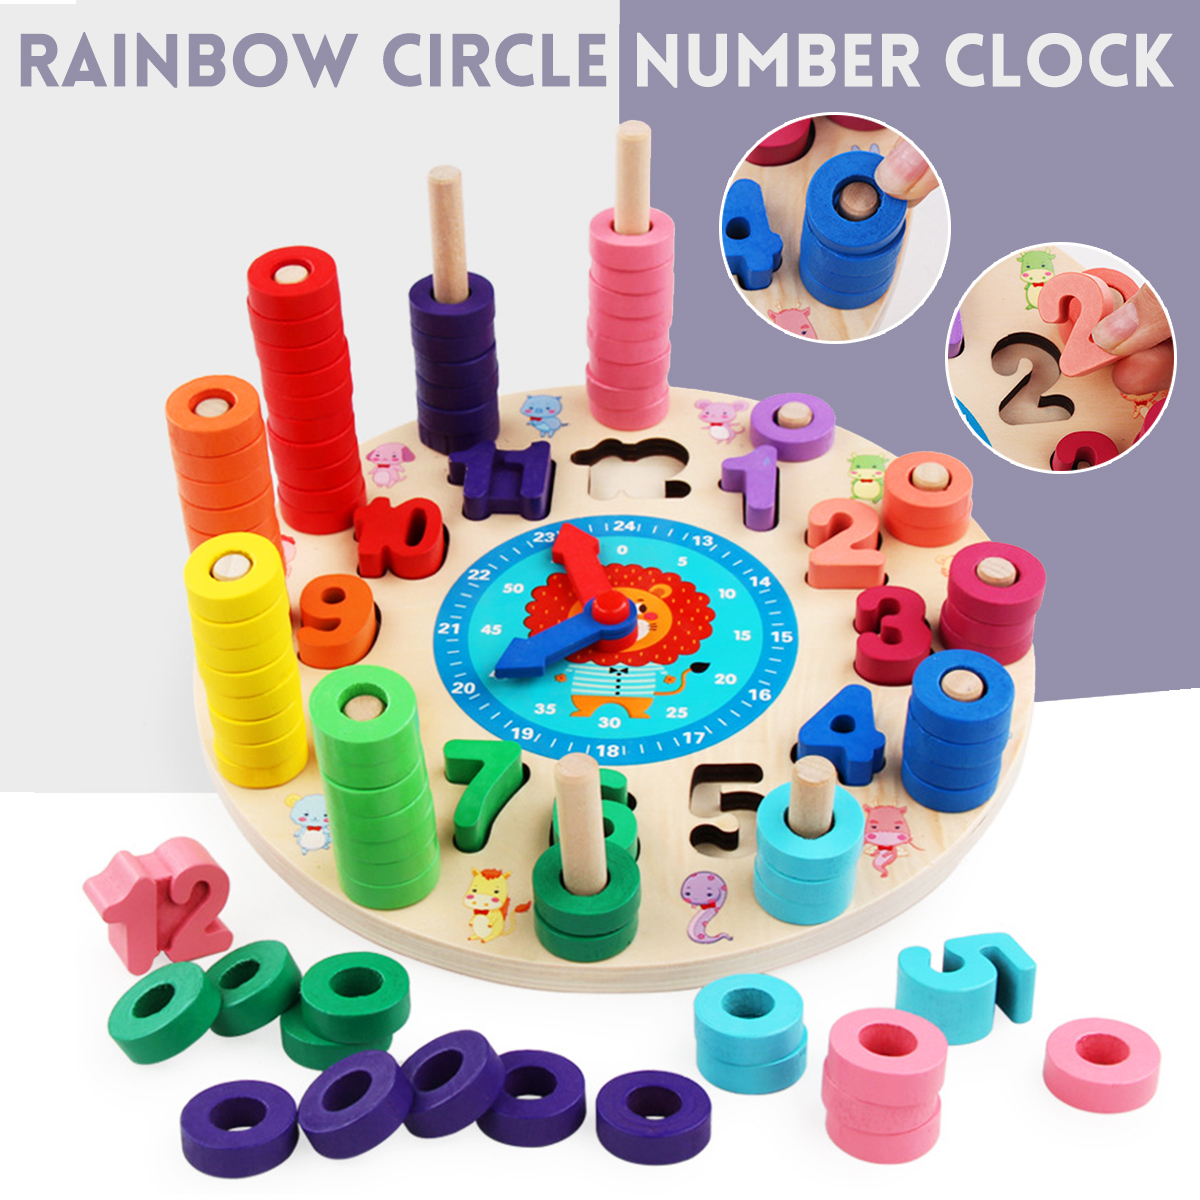 Wooden-Baby-Kids-Rainbow-Circle-Number-Alarm-Clock-Educational-Teaching-Toys-1624807-1